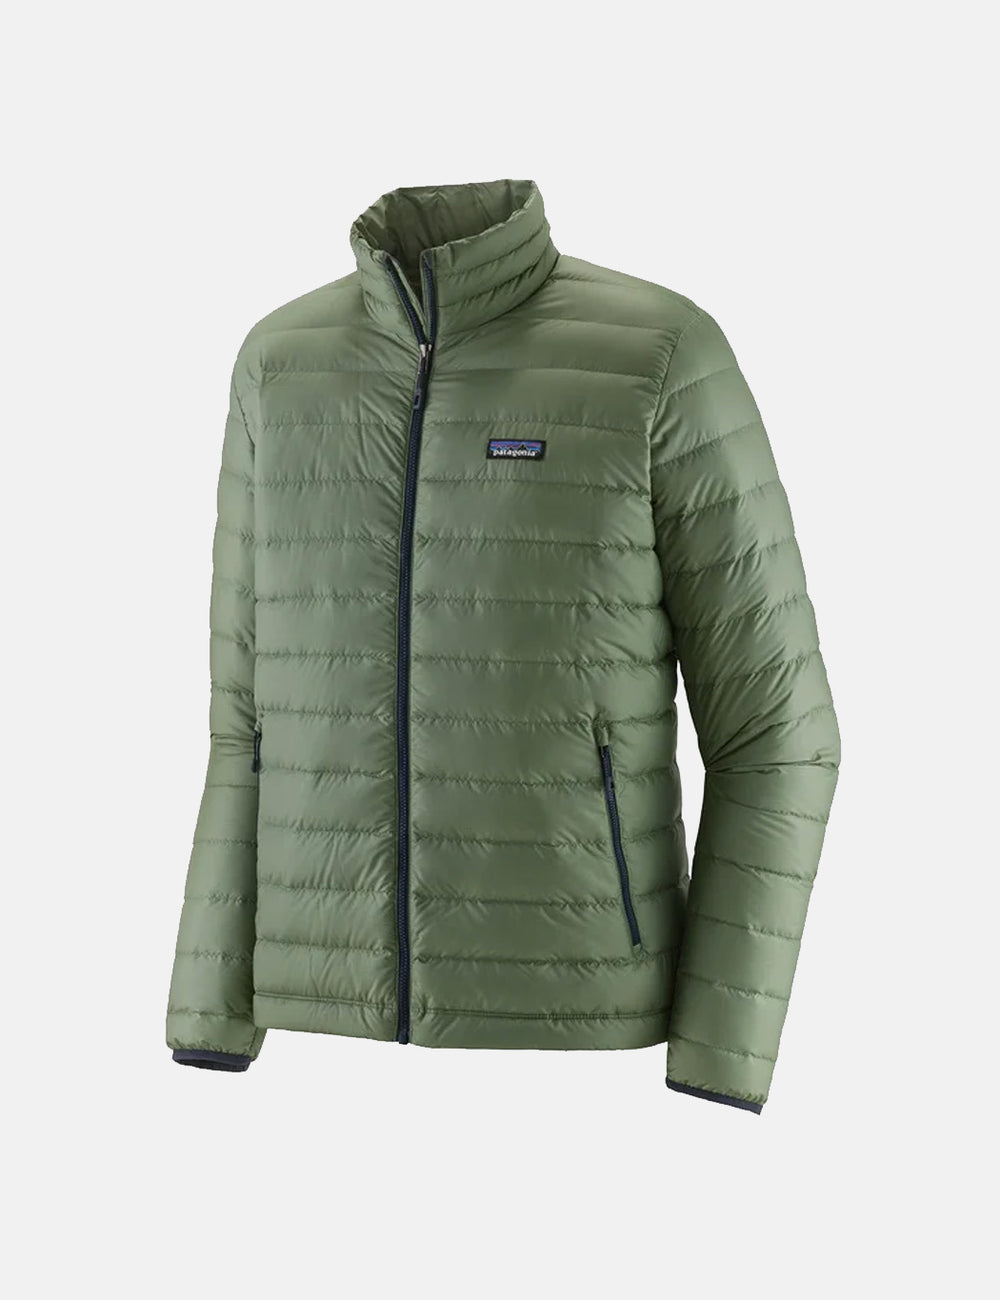 Patagonia Down Sweater Jacket - Nouveau Green